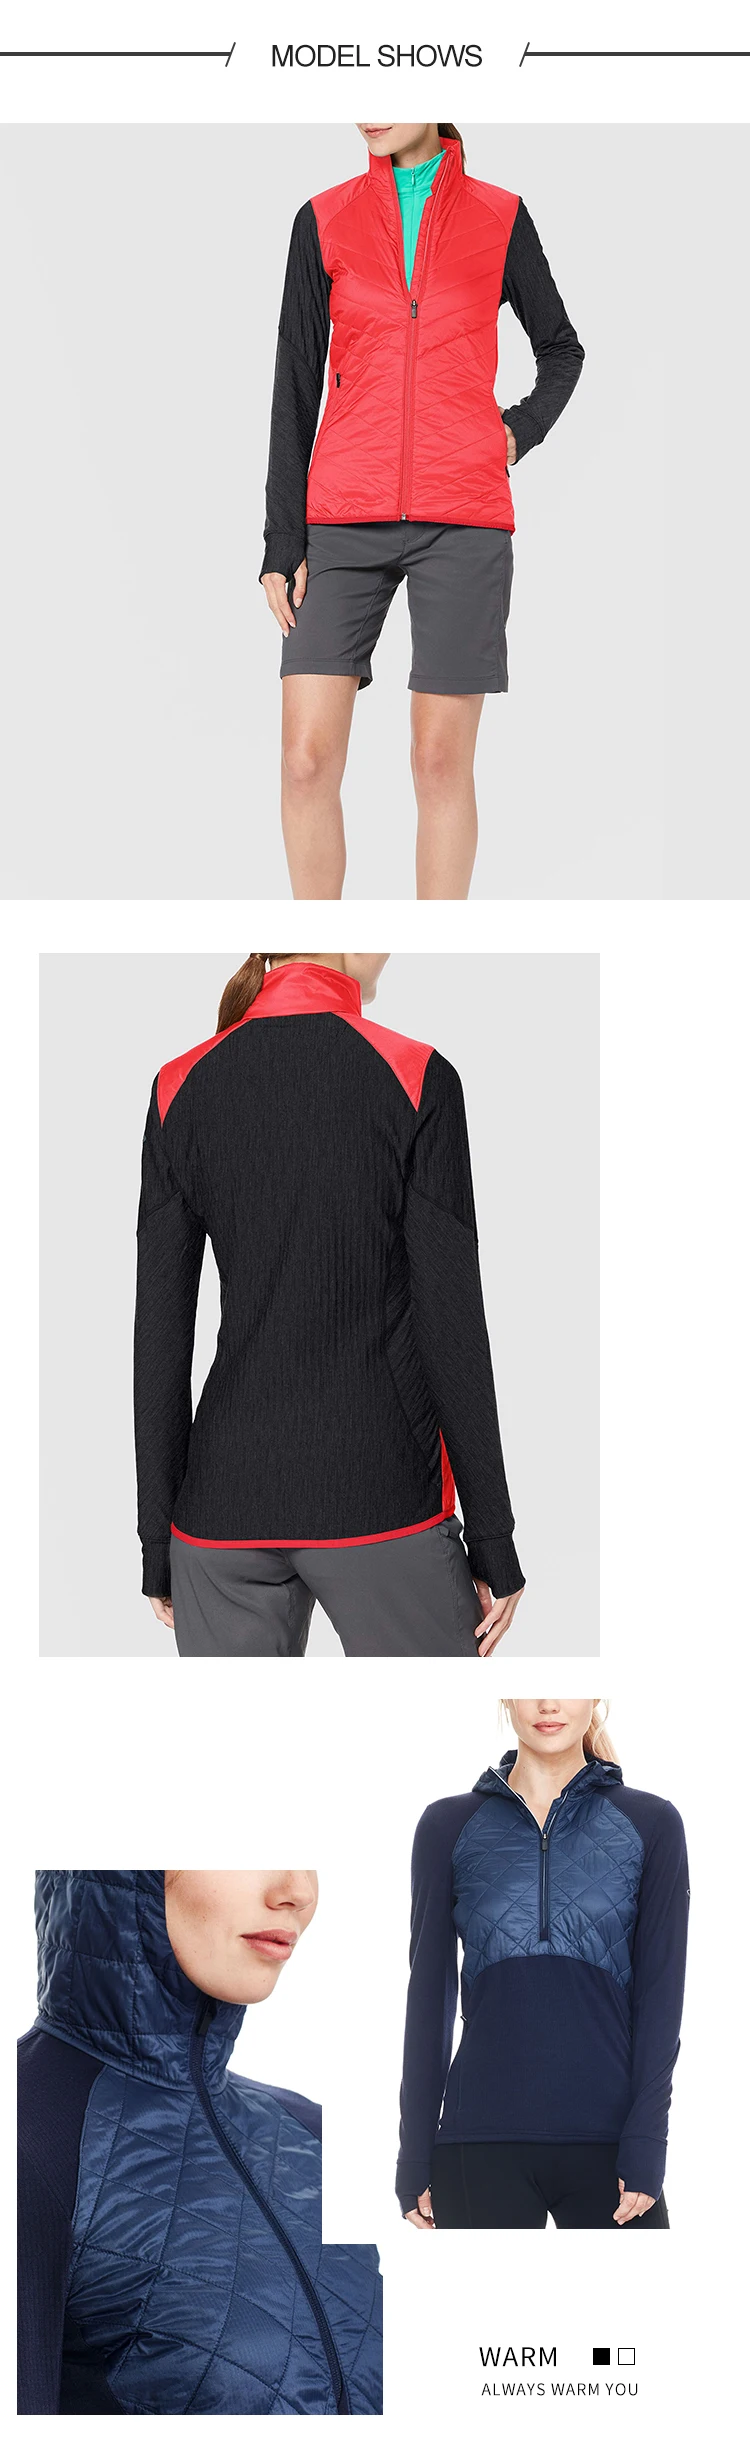 Enerup Fashion Black Merino Wool Running Sports Veste Pour Femme Giacca Donna Jaqueta Feminina Varisty Jacket For Women